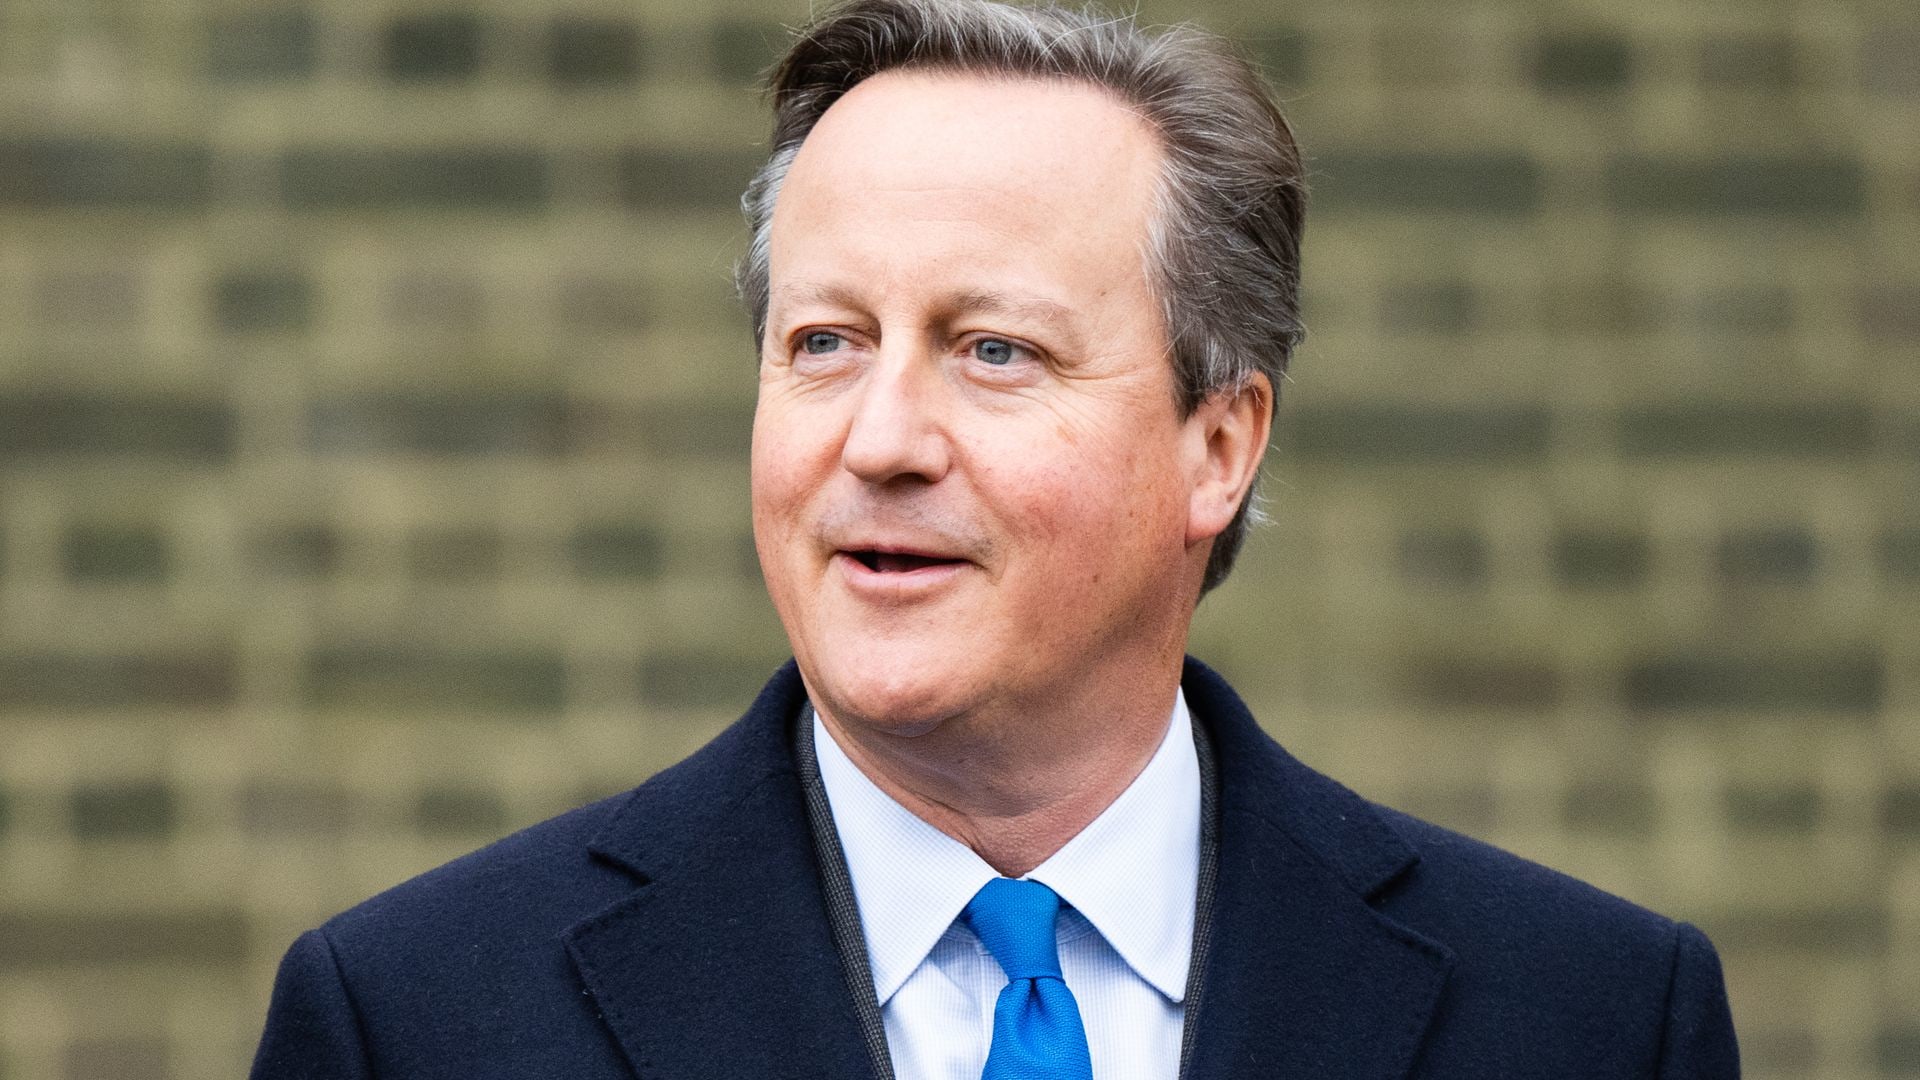 David Cameron - Biography | HELLO!